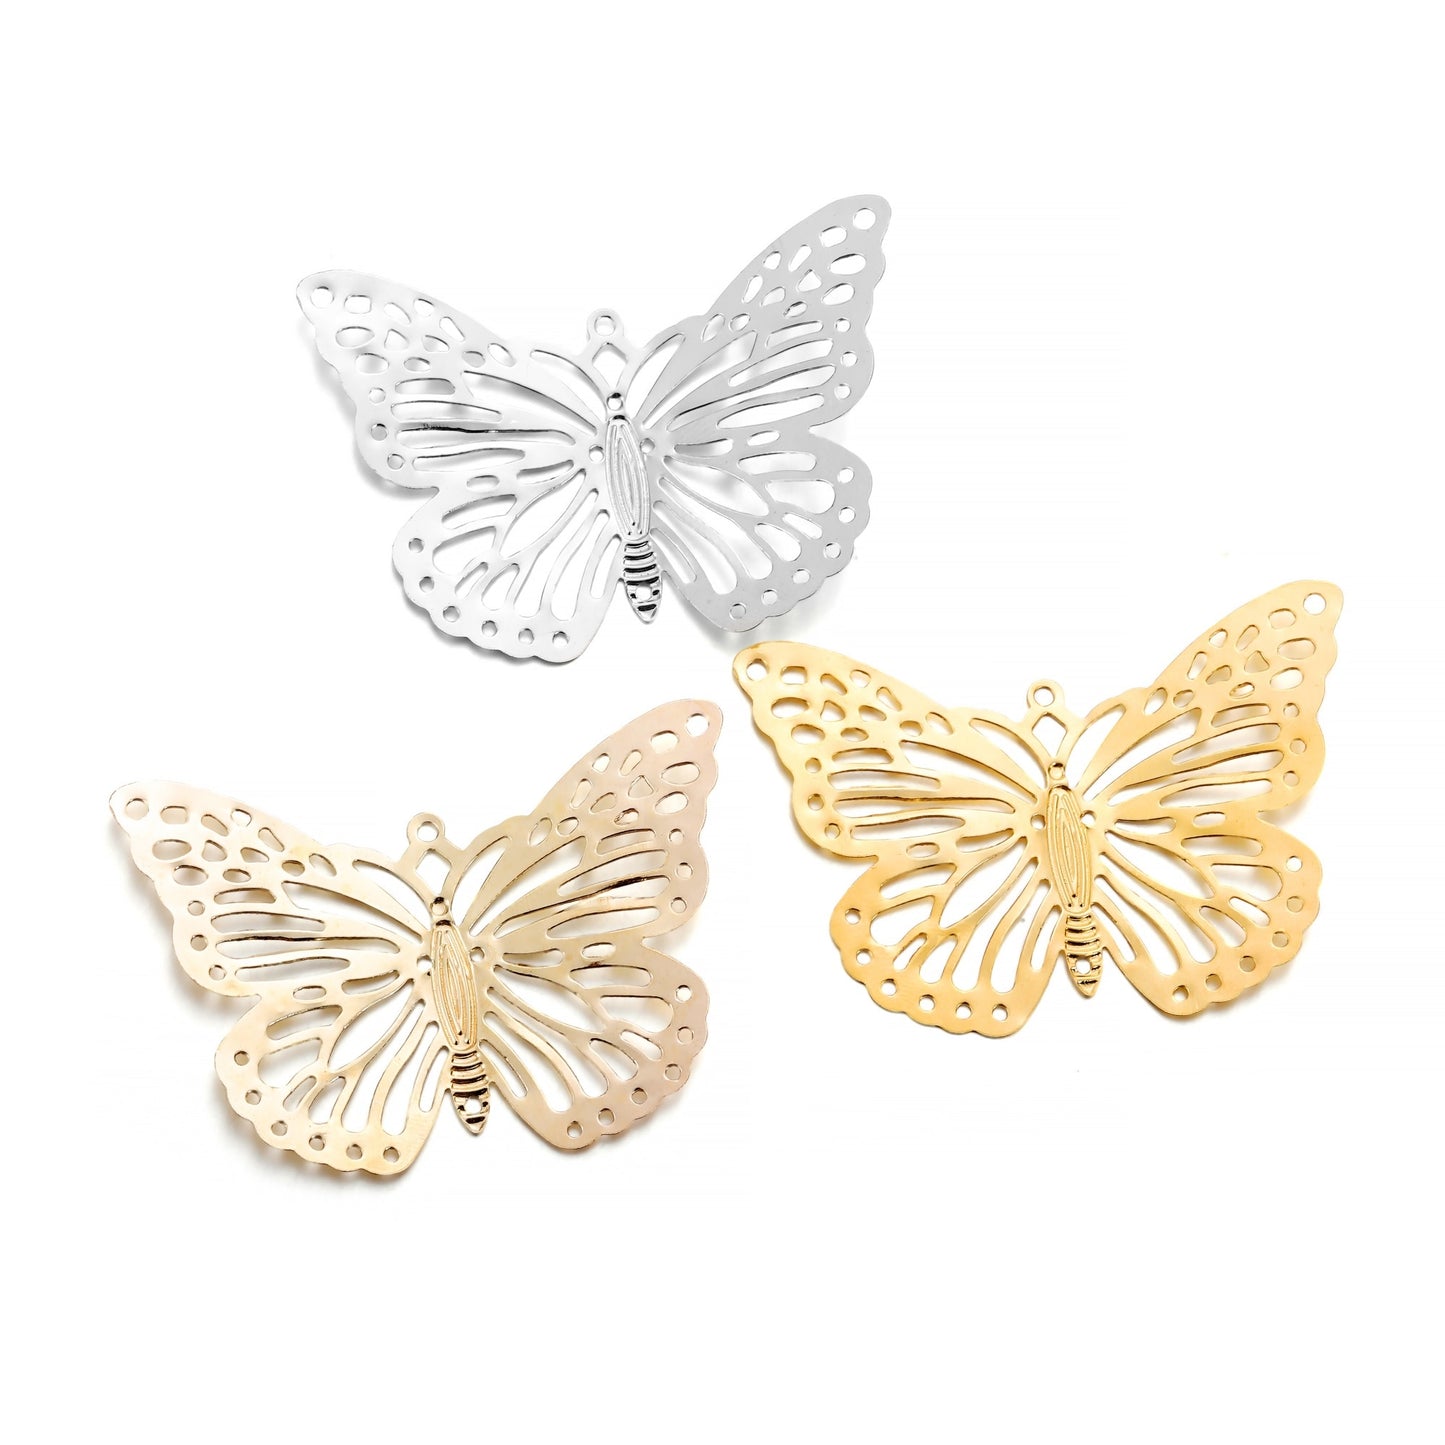 Schmetterlings-Anhänger mit filigranen Wickeln, 20–30 Stück